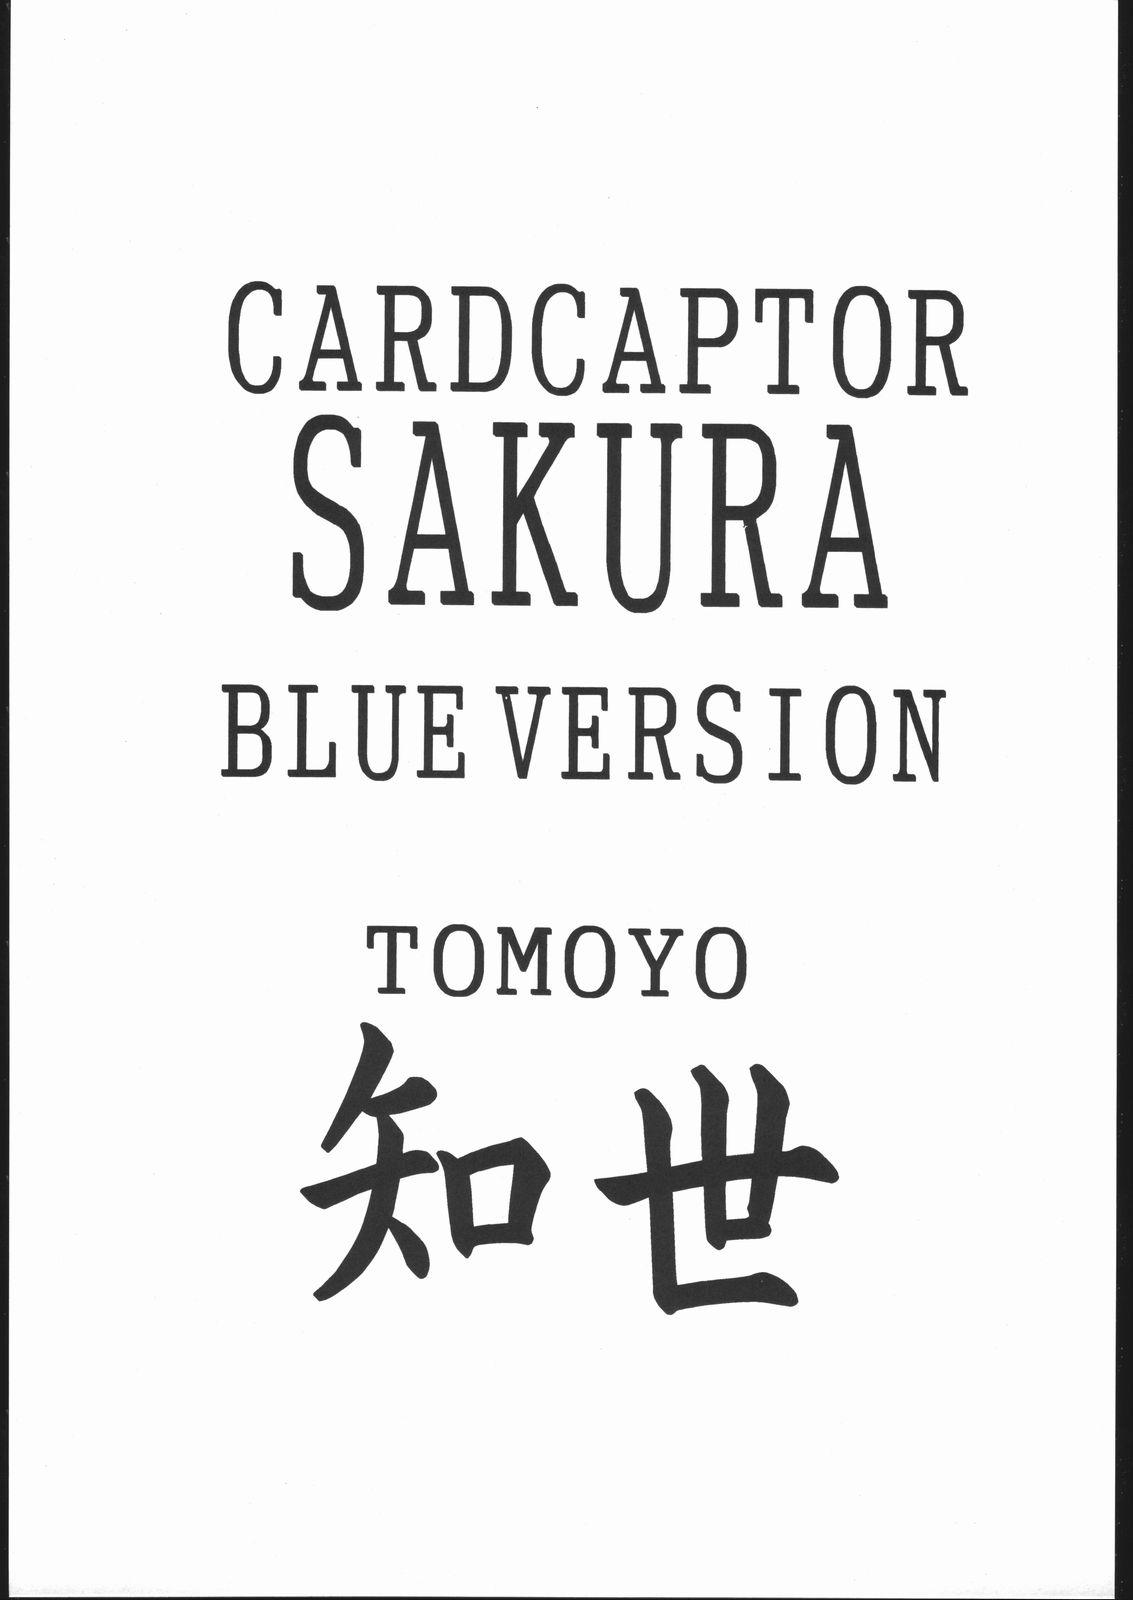 Pay Card Captor Sakura Blue Version - Cardcaptor sakura Van - Page 2